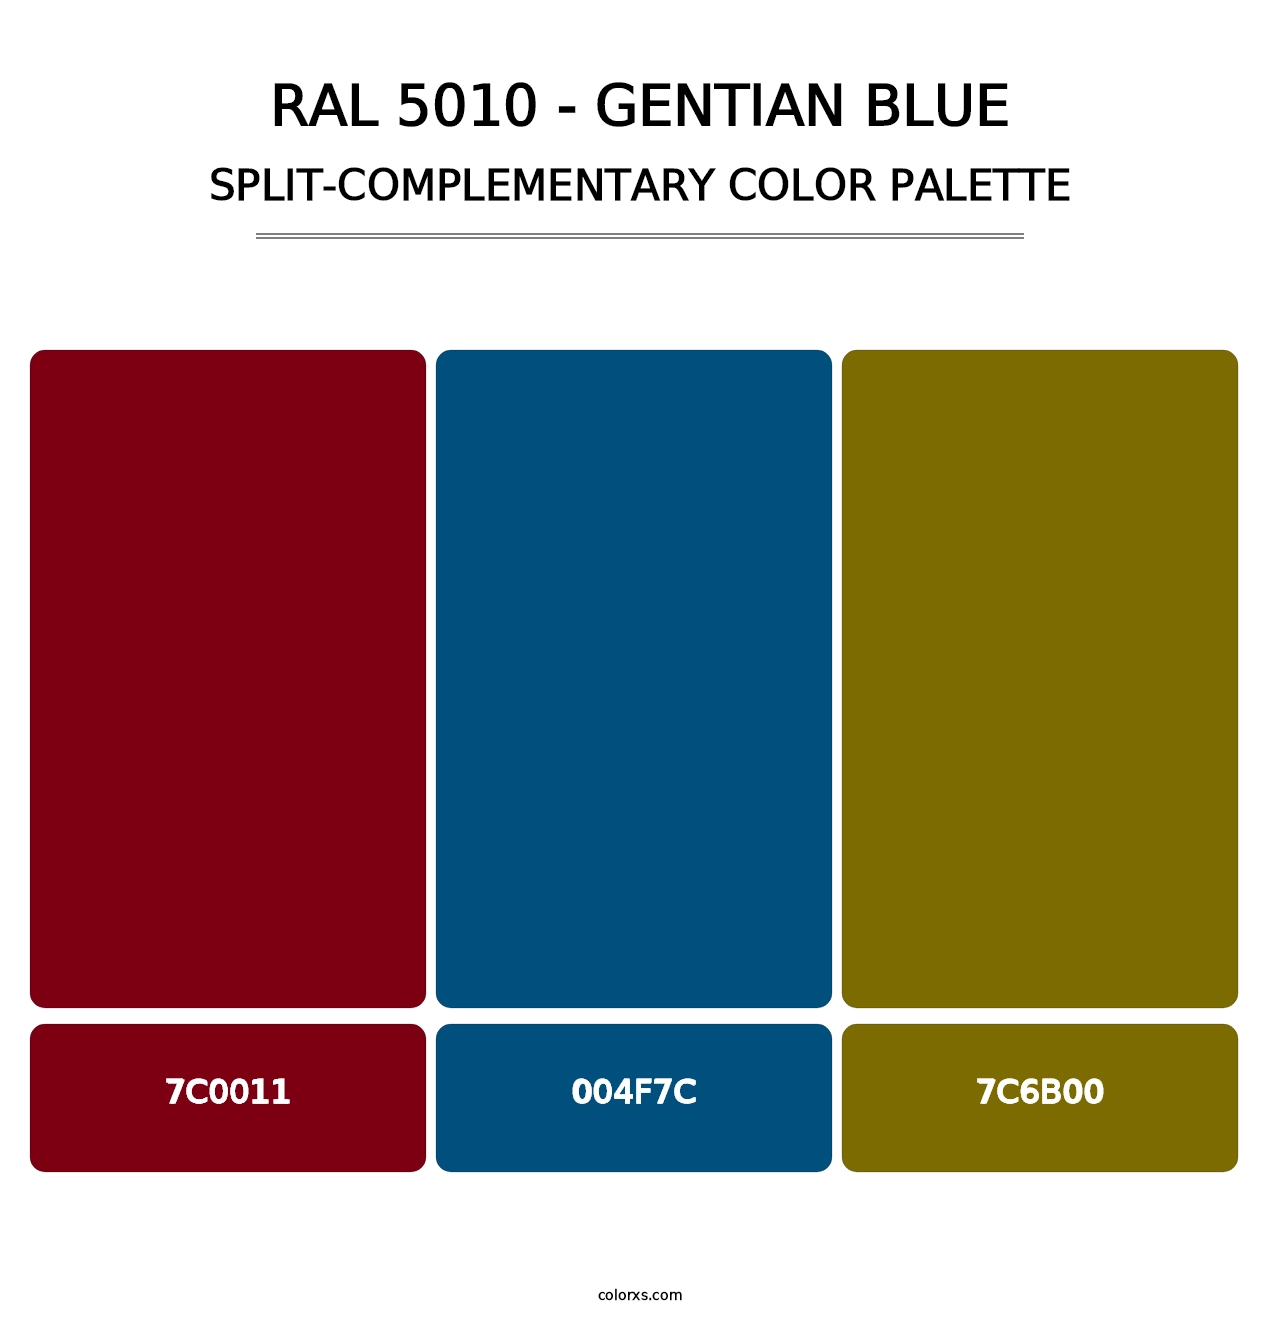 RAL 5010 - Gentian Blue - Split-Complementary Color Palette